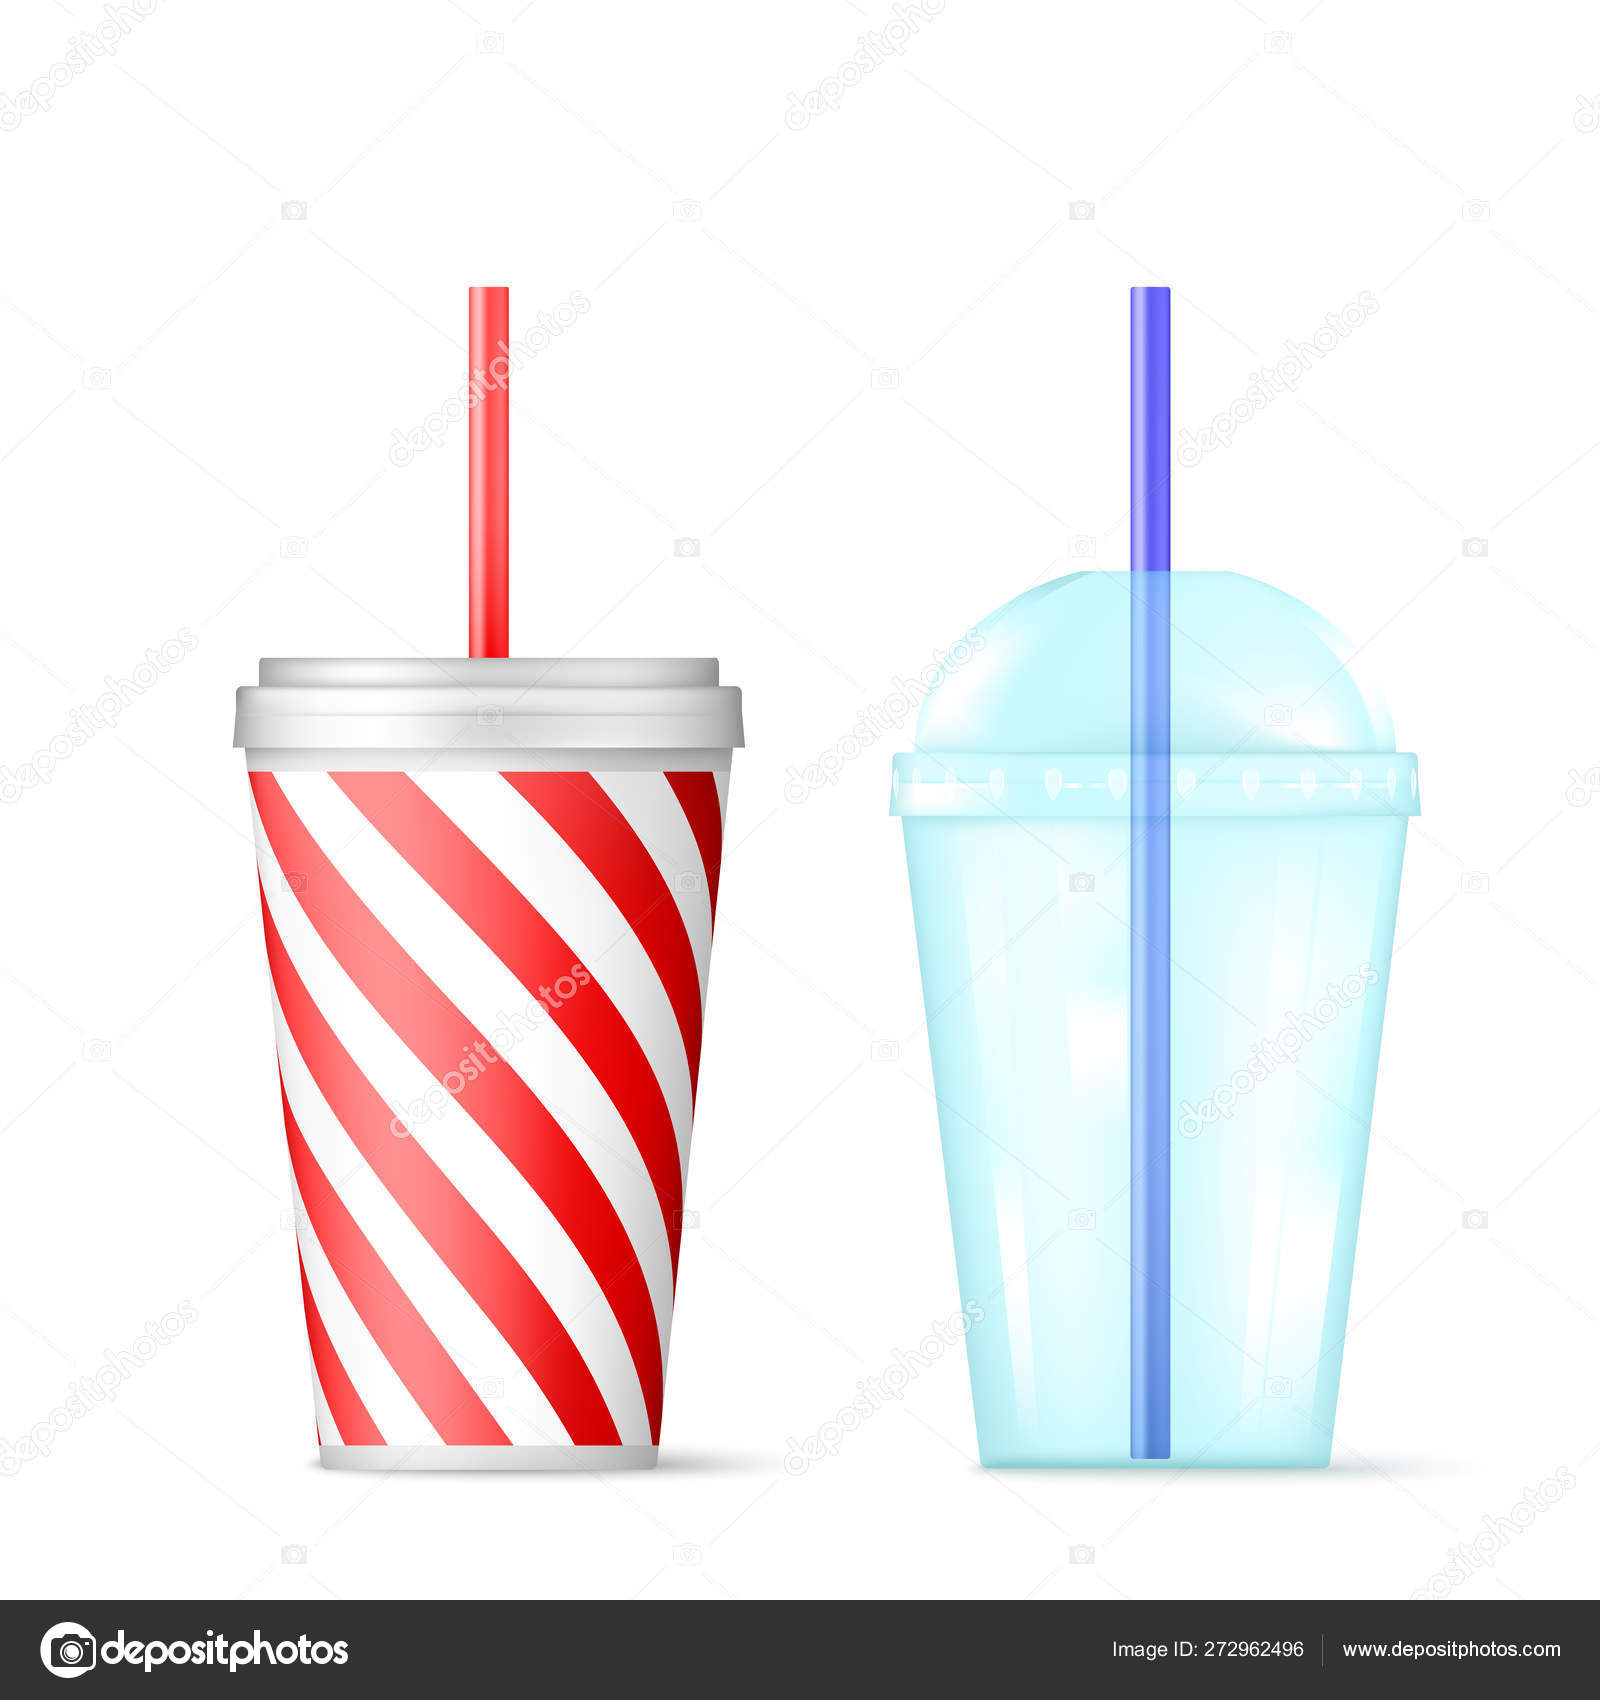 https://st4.depositphotos.com/14018410/27296/v/1600/depositphotos_272962496-stock-illustration-plastic-transparent-disposable-cup-with.jpg